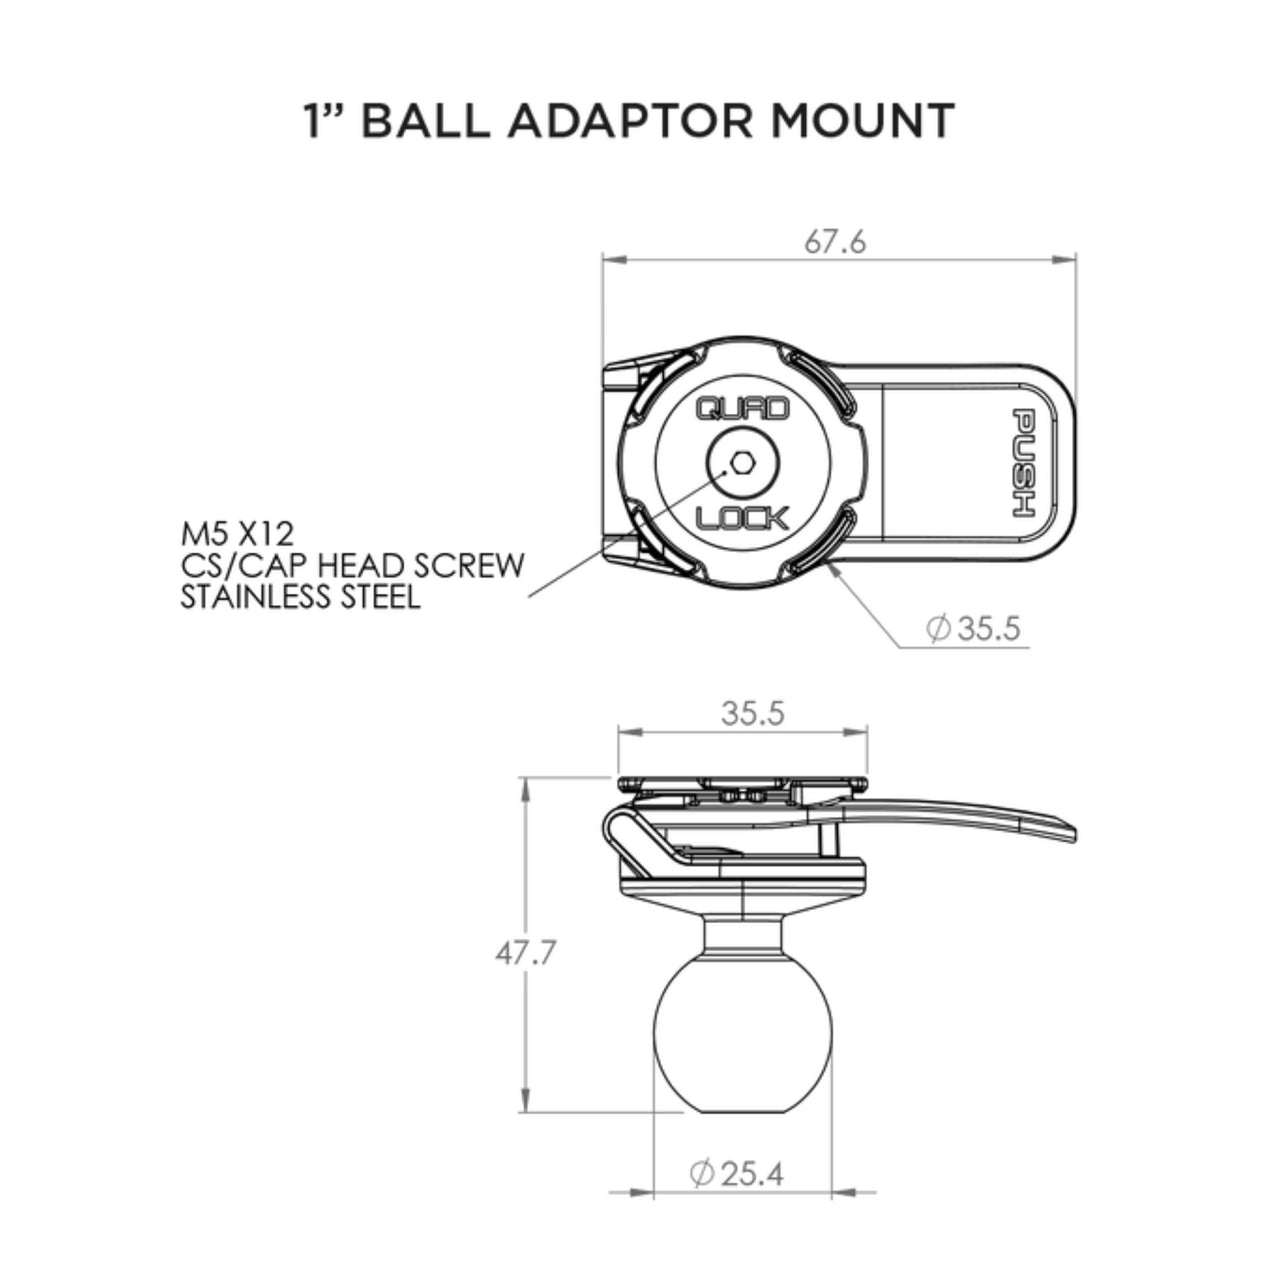 Quad Lock 1" Ball Adaptor Mount